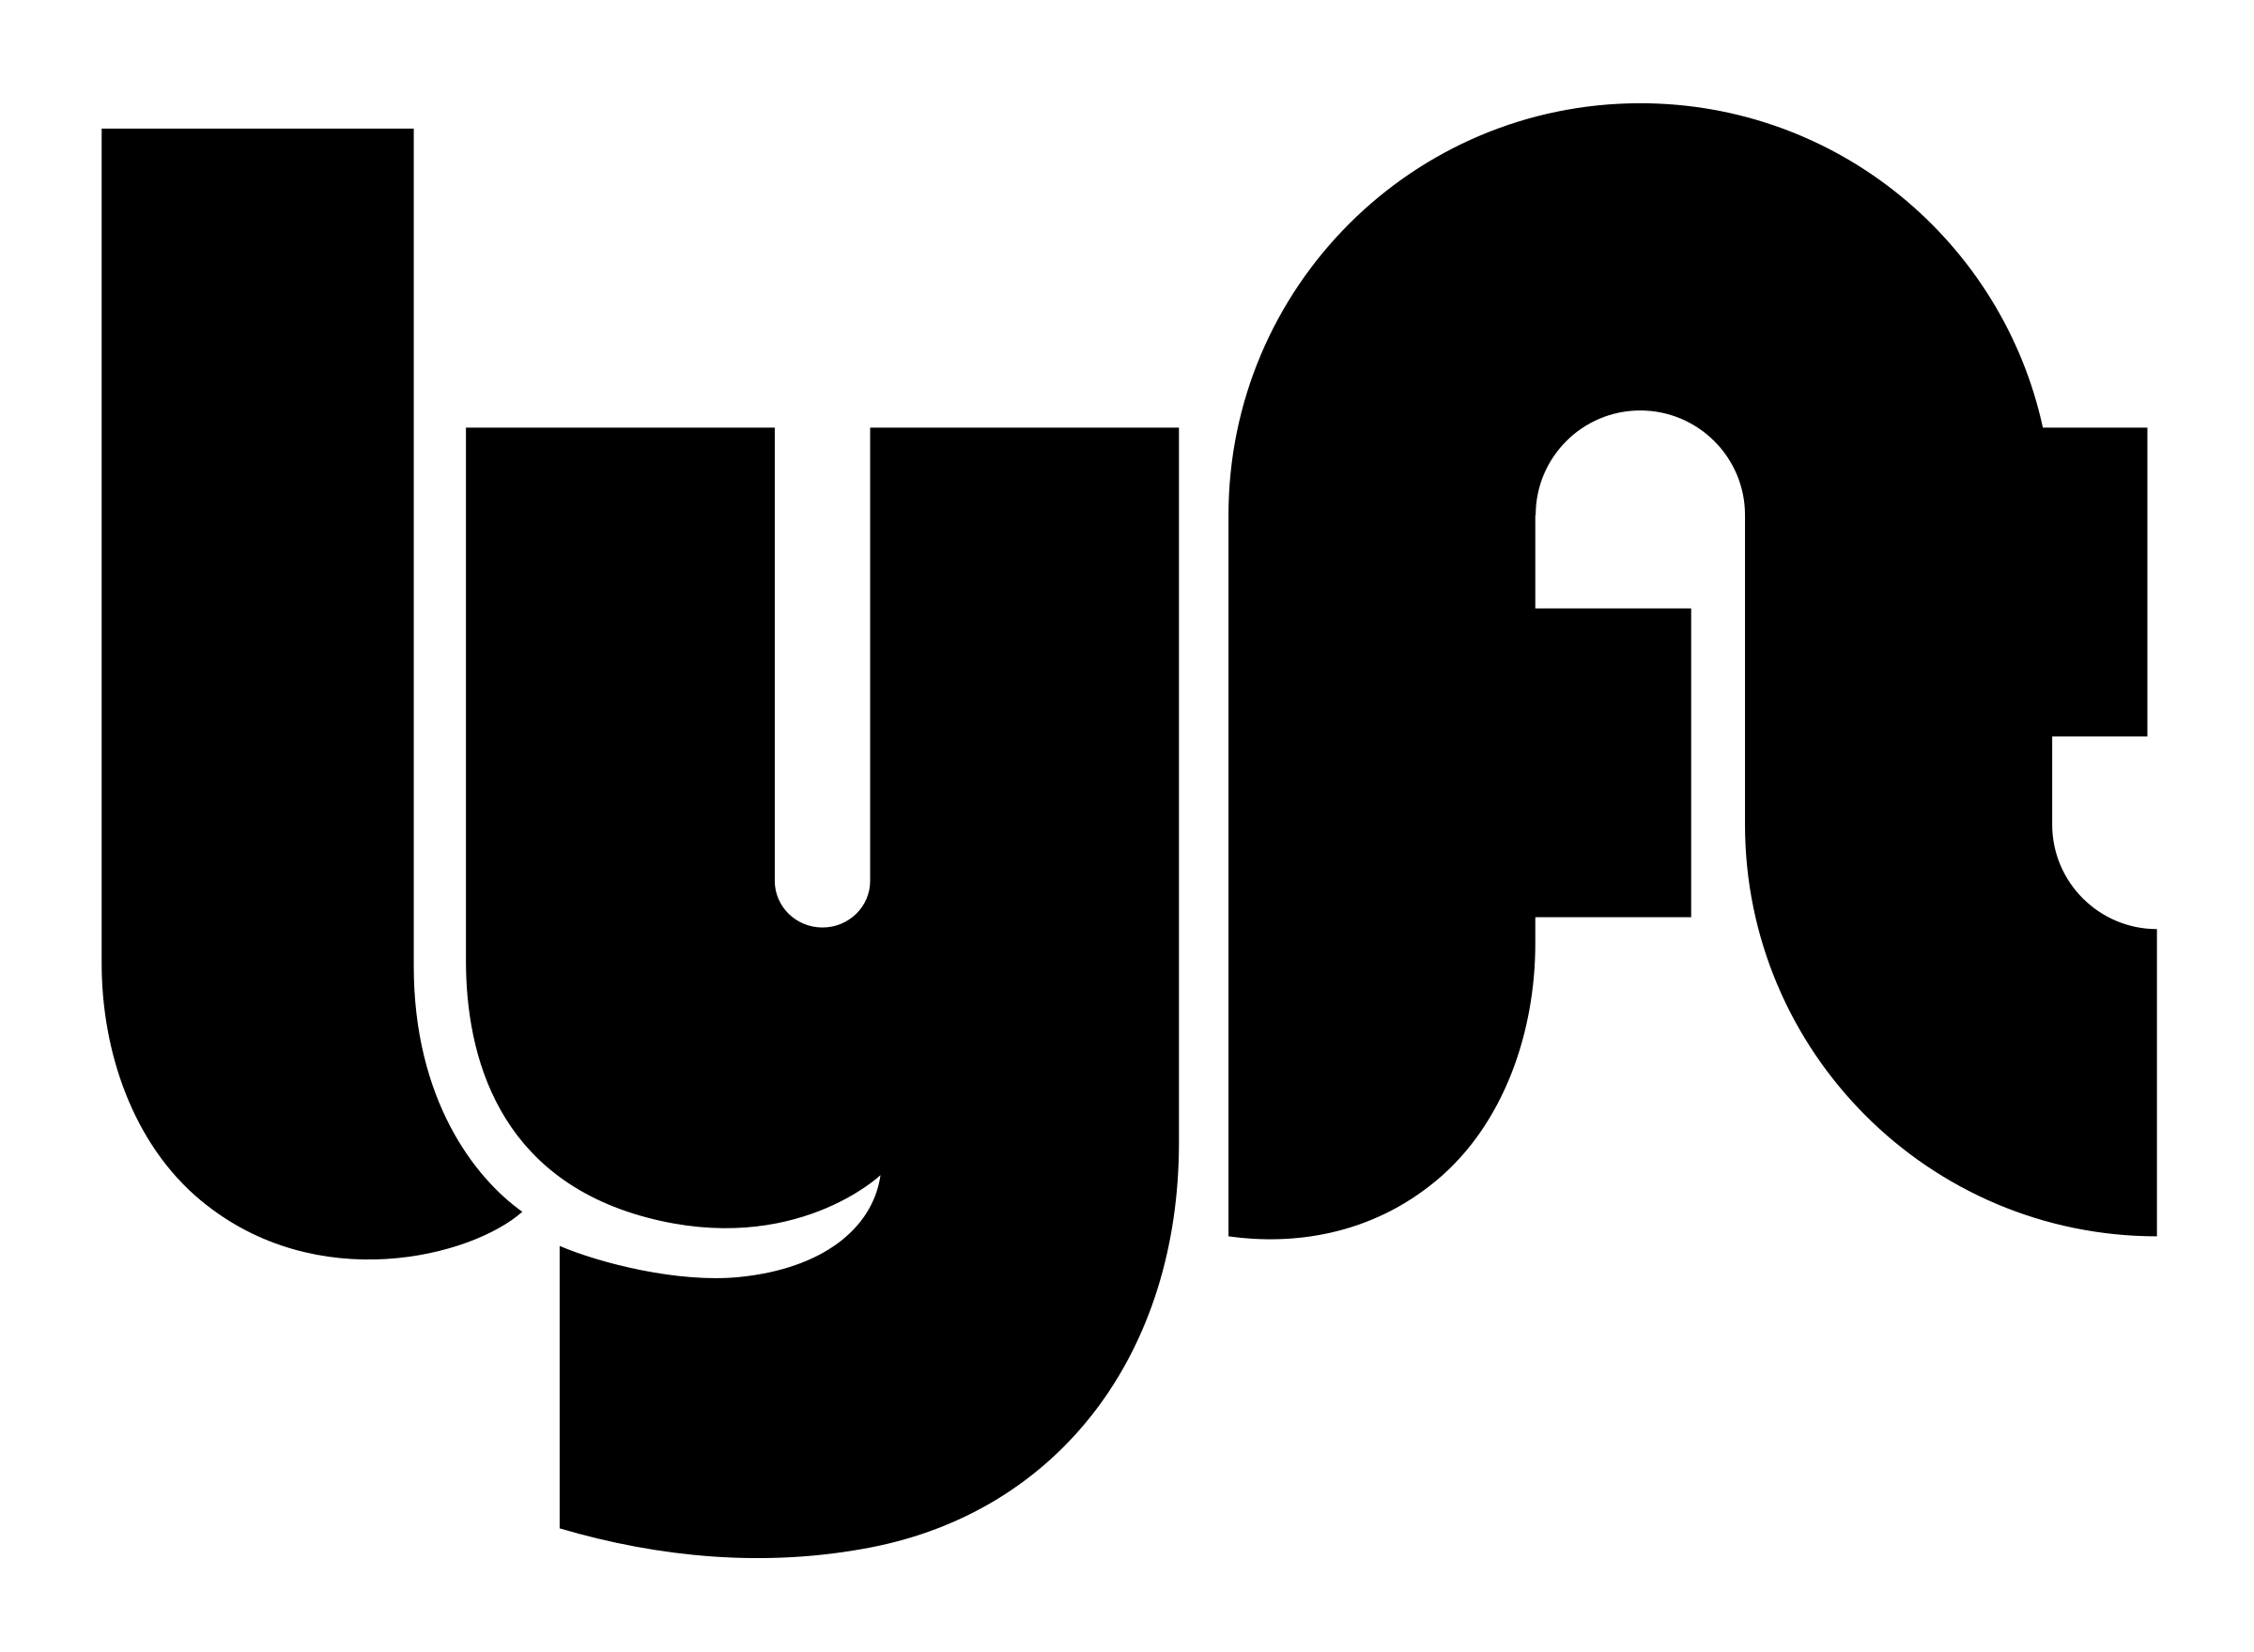 lyft-logo-black-and-white